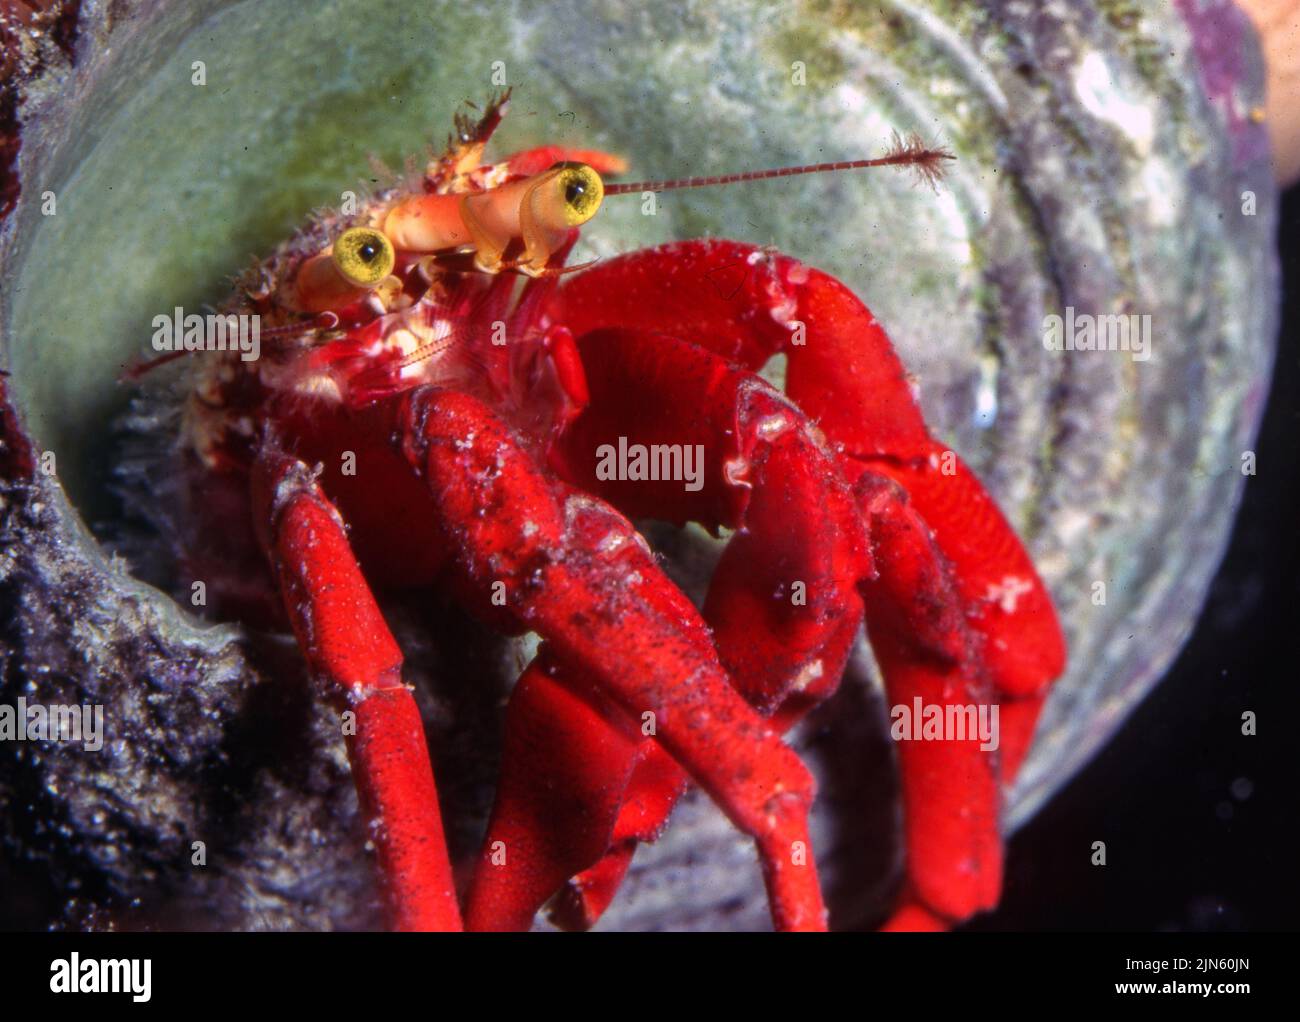 Red reef hermit crab (Paguristes cadenati). Stock Photo